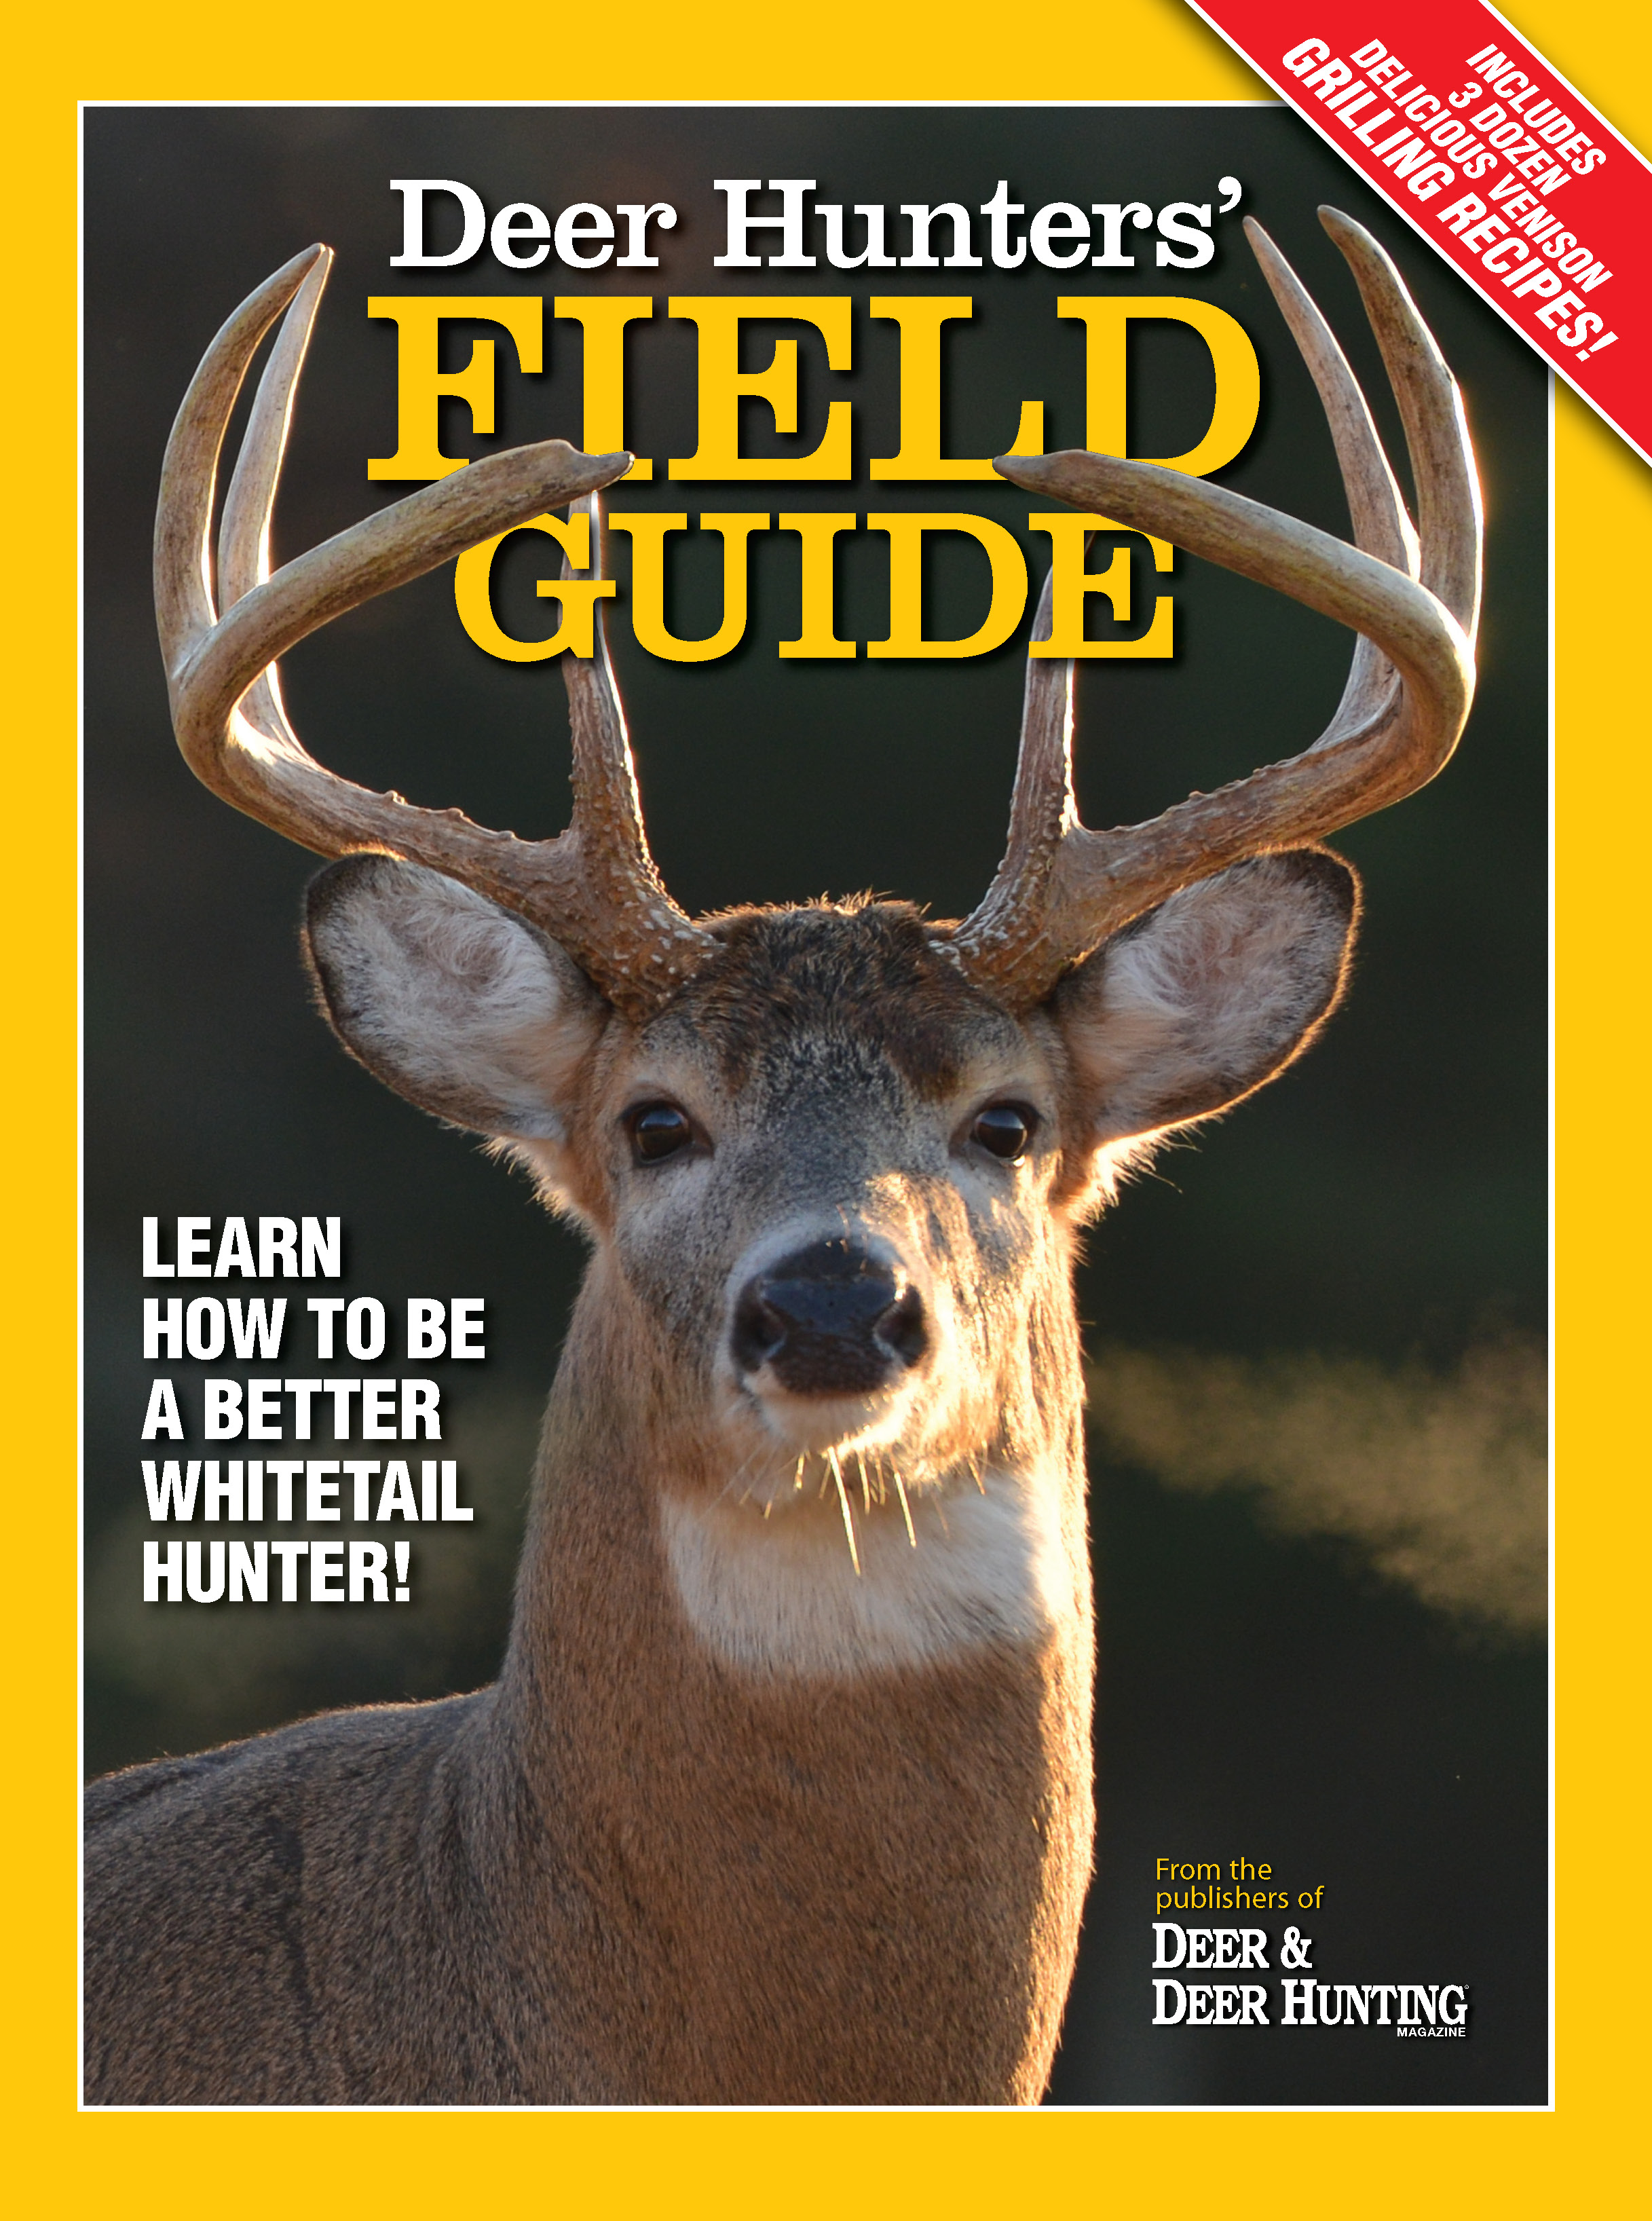 https://s22301.pcdn.co/wp-content/uploads/Deer-Hunters-Field-Guide-Cover.jpg